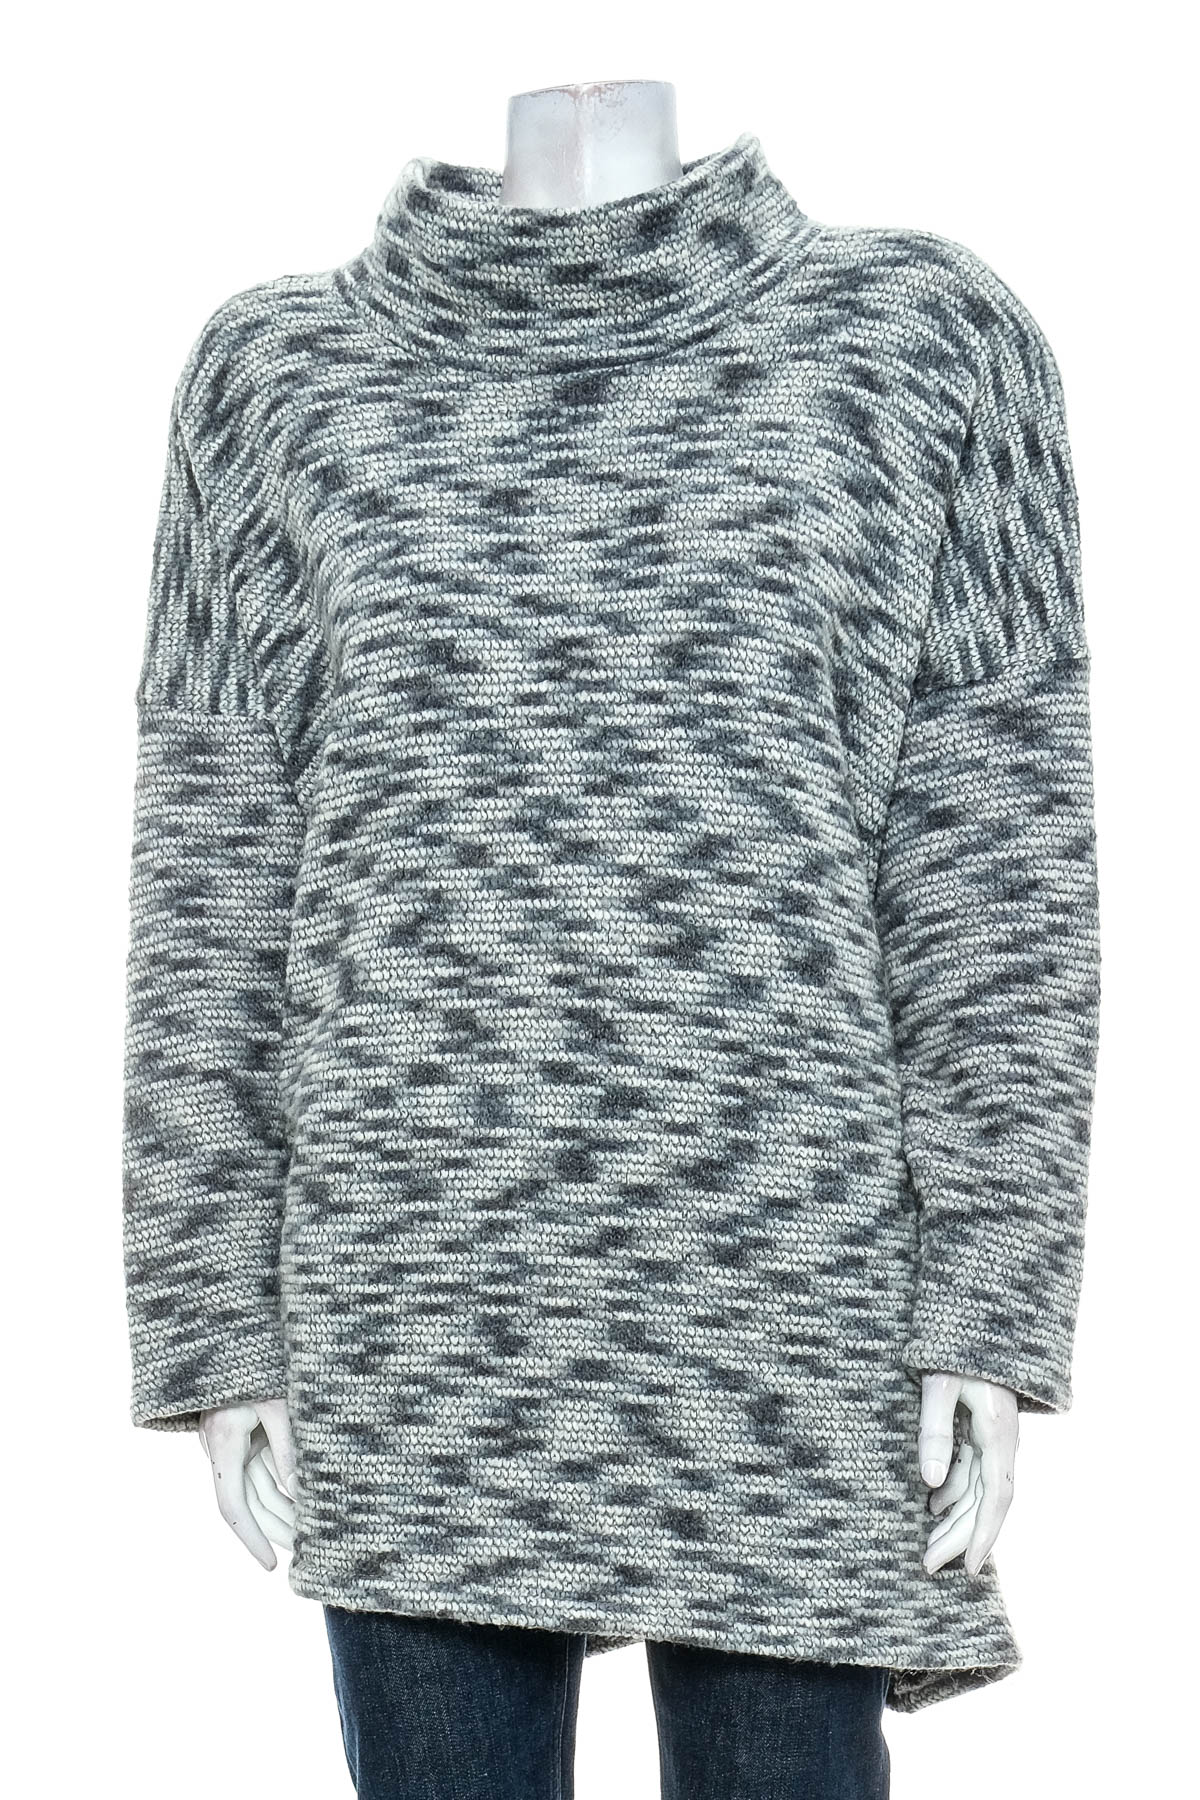 Women's sweater - InSein - 0